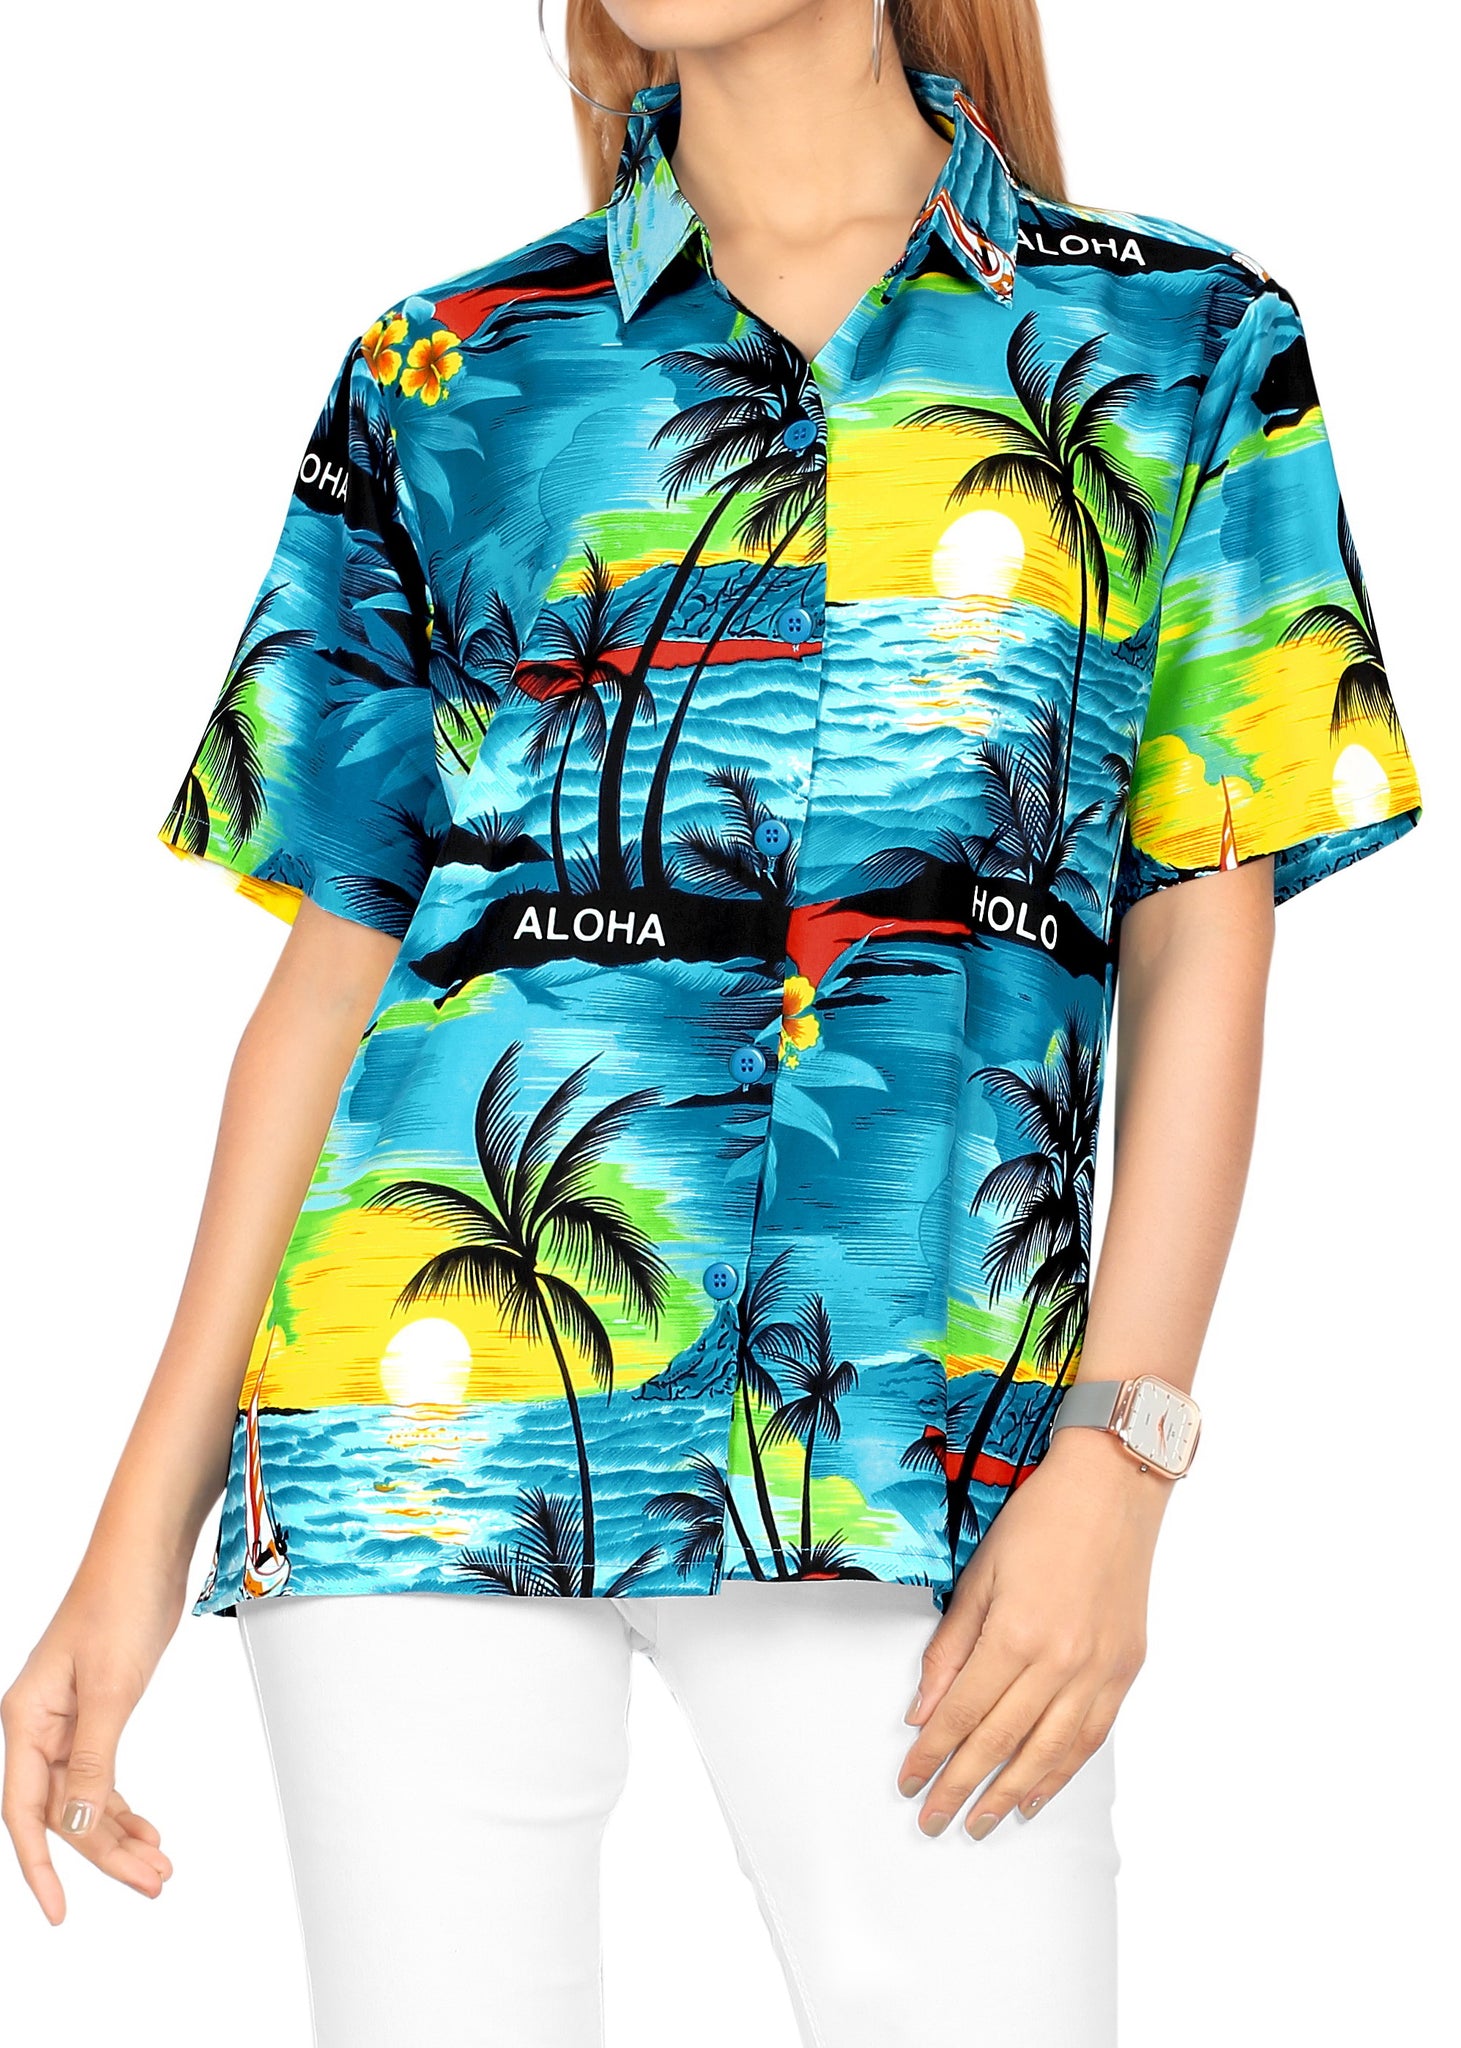 LA LEELA Women's Plus Size Summer Casual Hawaiian Shirt